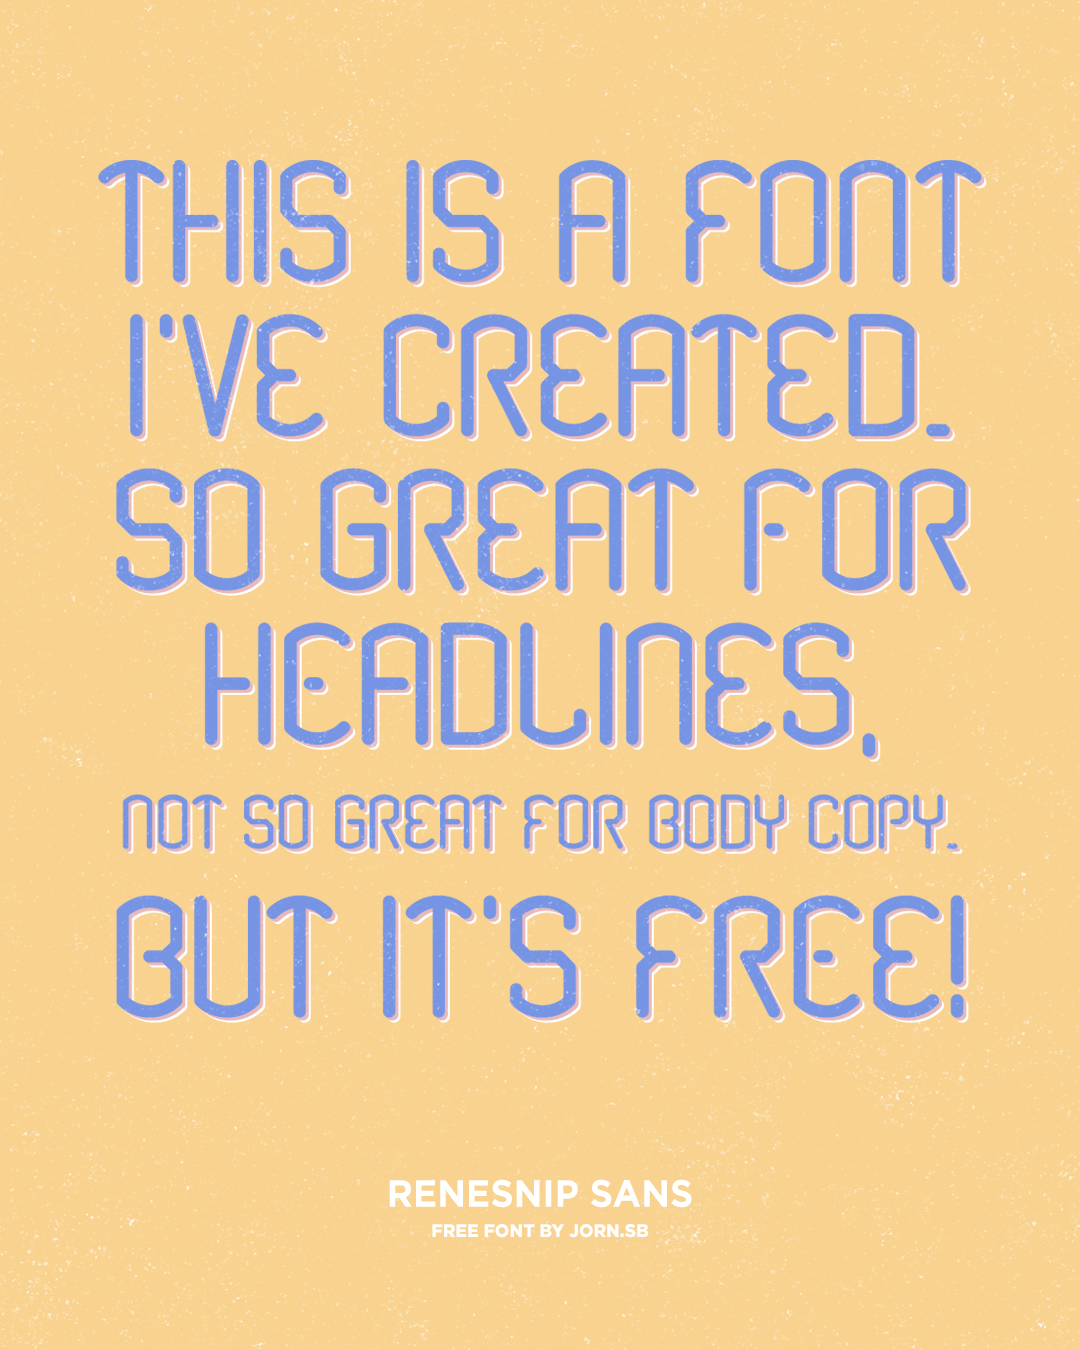 Renesnip Sans font